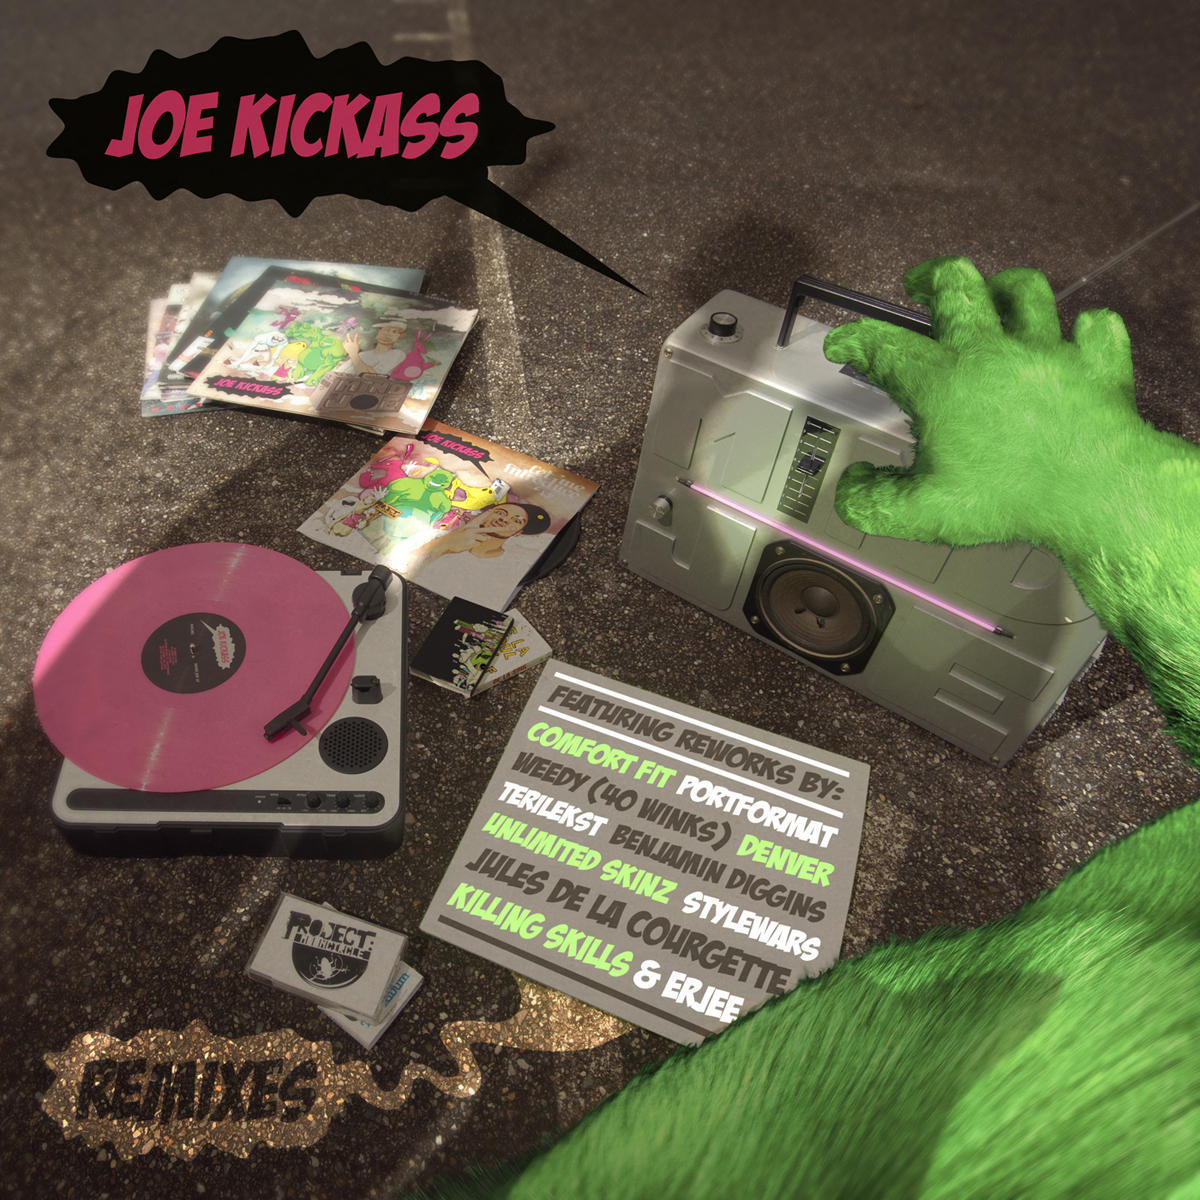 Free Download: Joe Kickass – Mind Joe Remixes (2011)